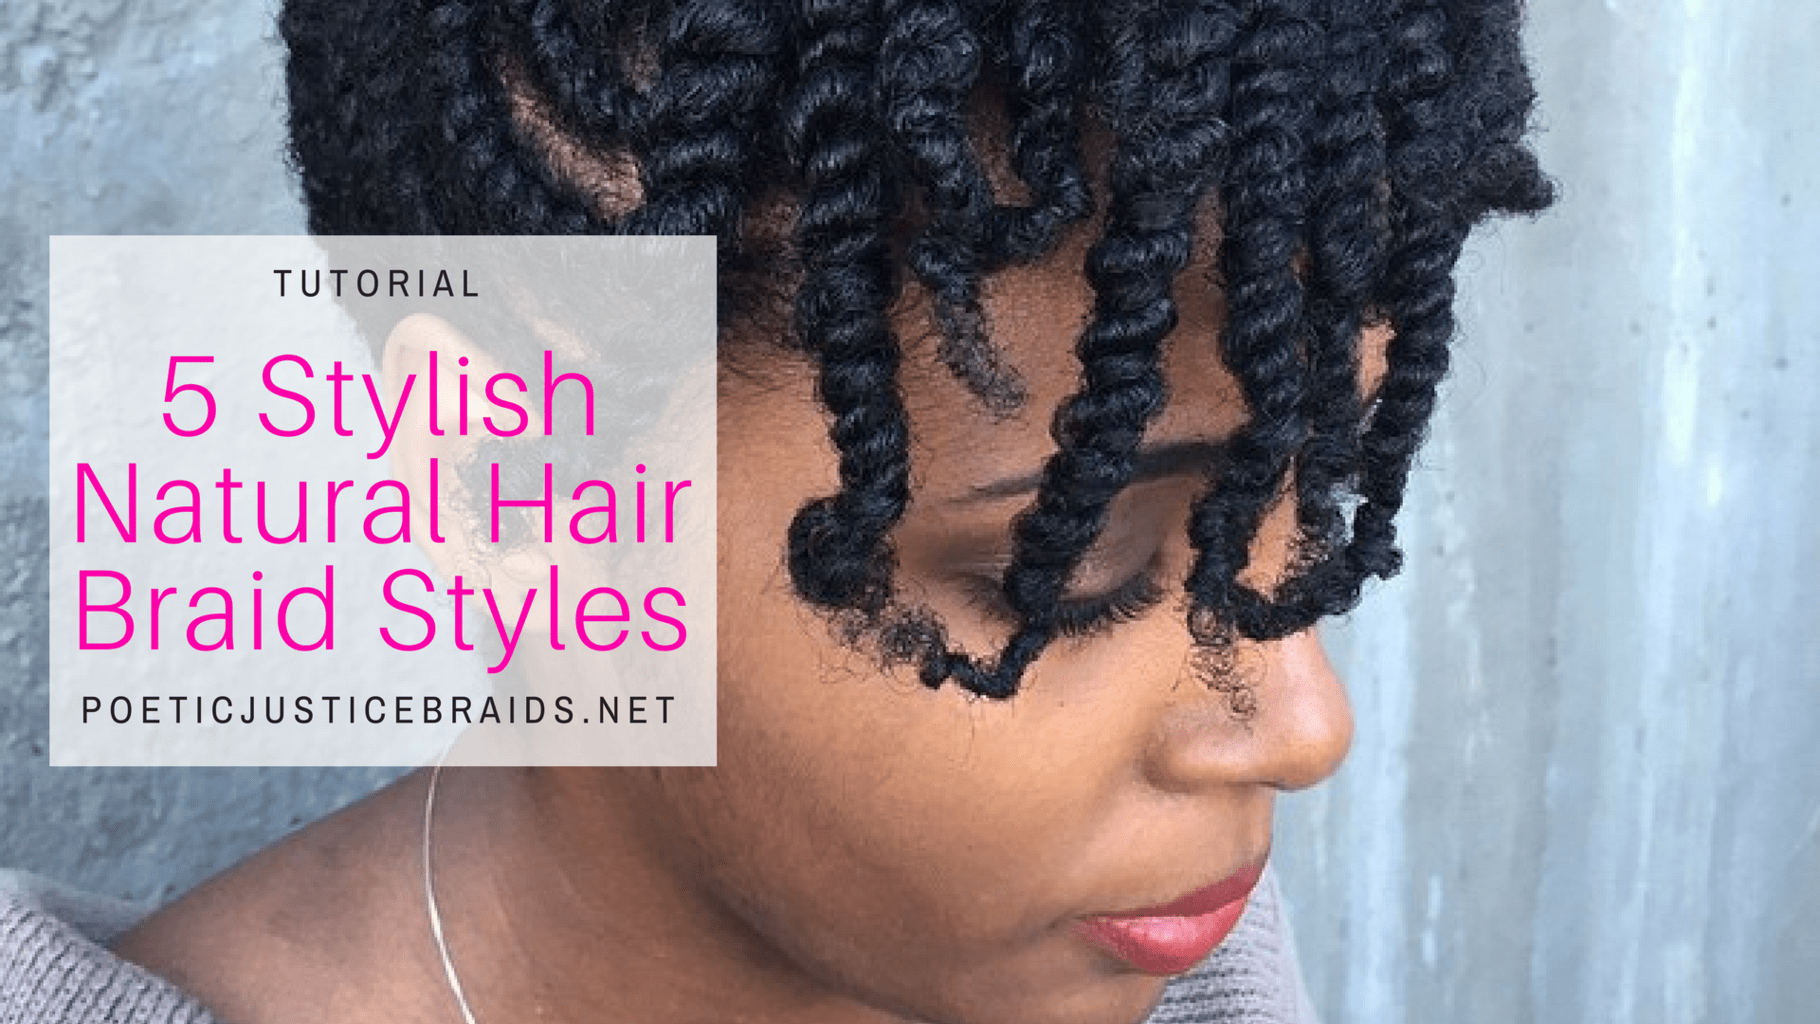 Stylish Natural Hair Braid Styles Step-by-Step Video Tutorials